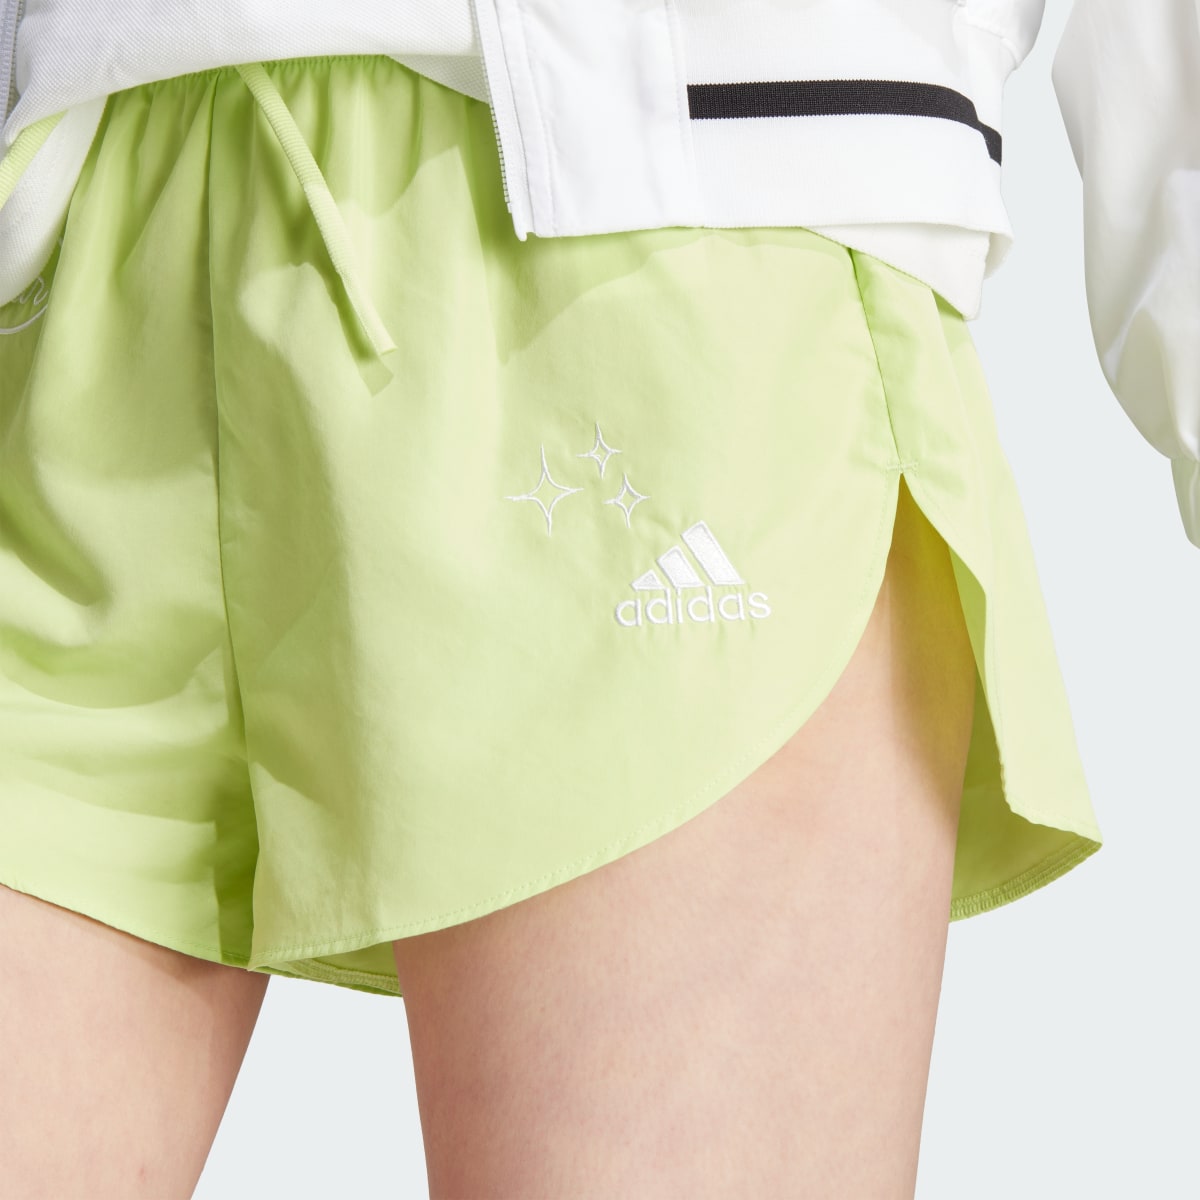 Adidas Scribble Woven Shorts. 6